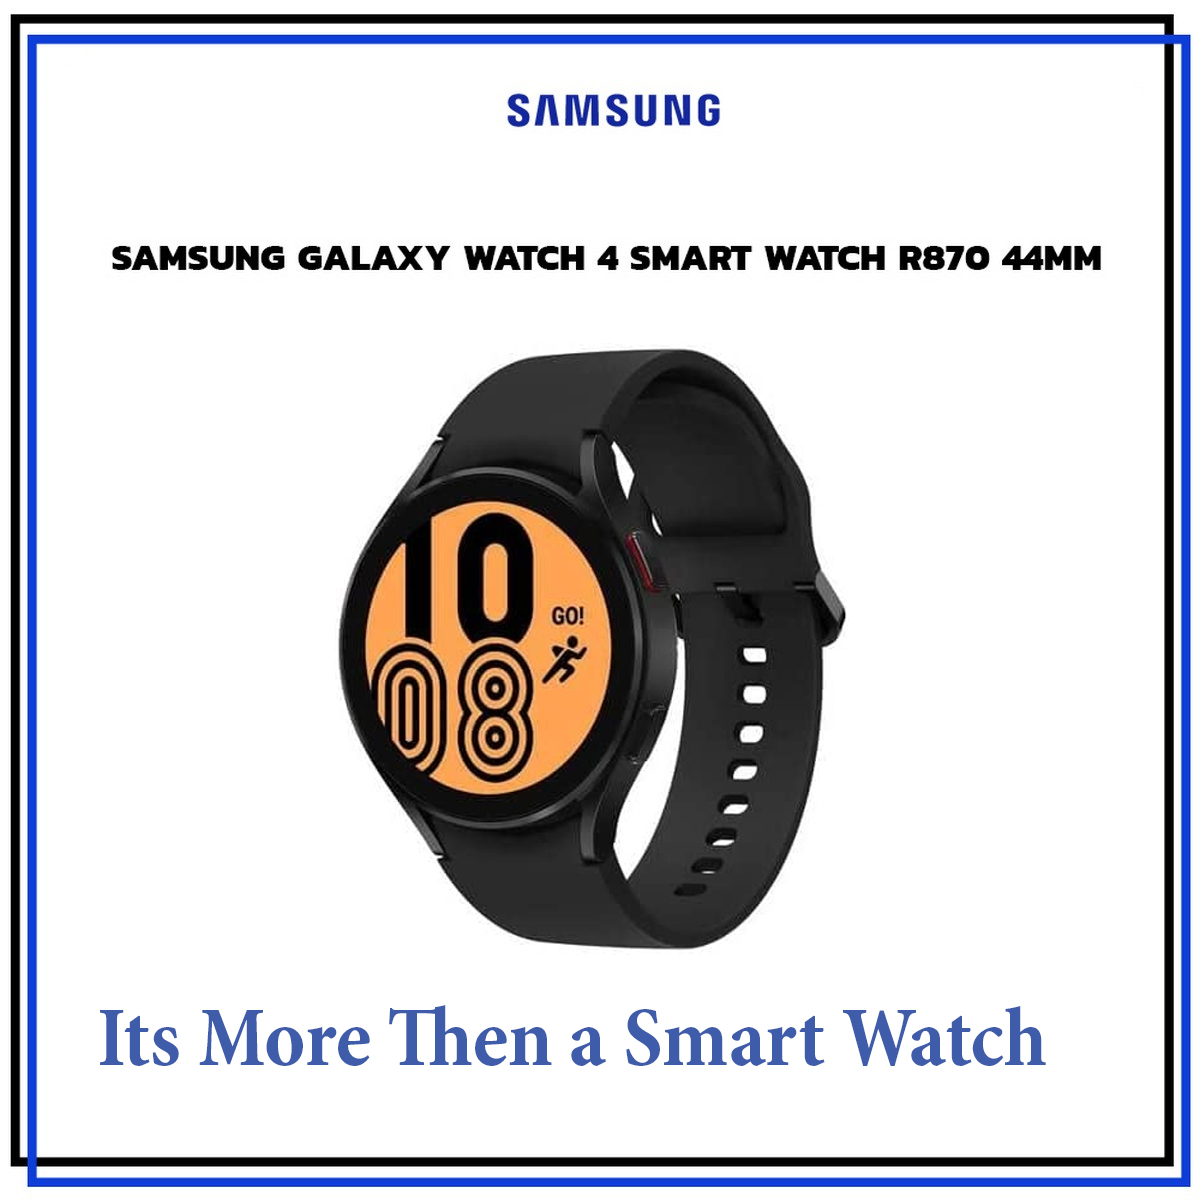 Samsung Smart Watch Price in Pakistan